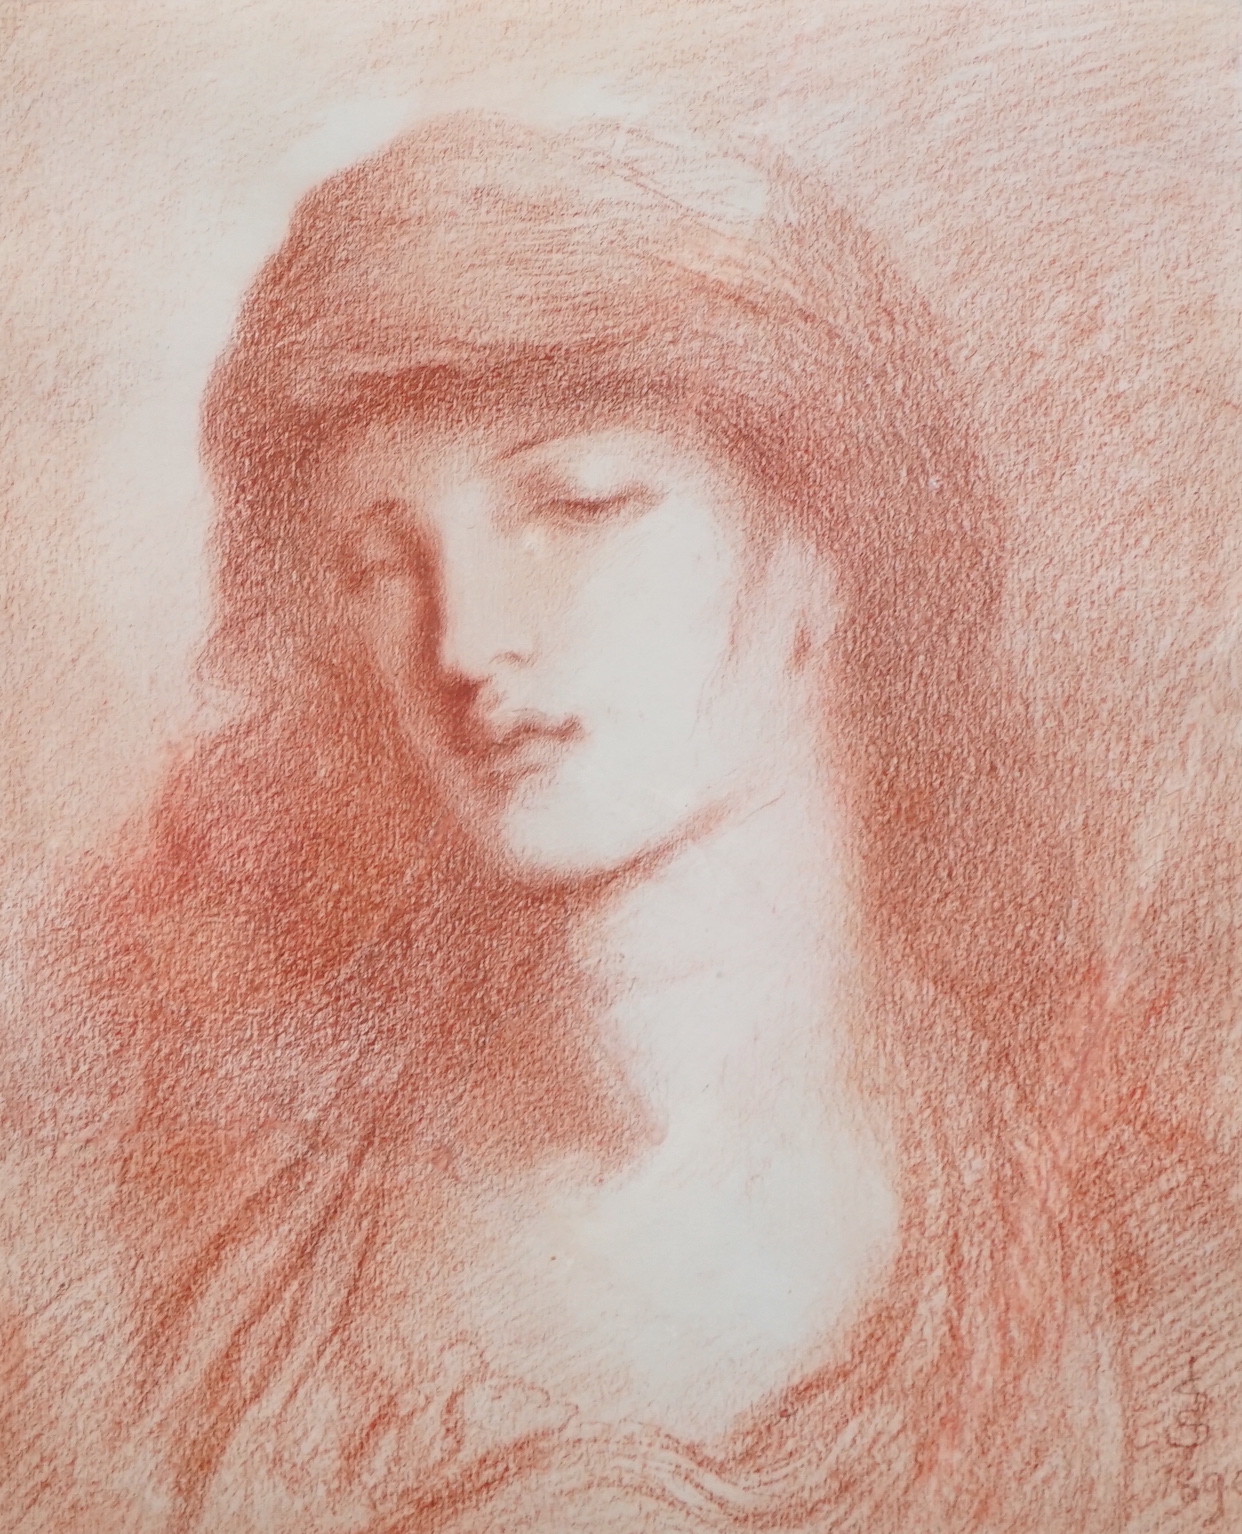 Simeon Solomon (British, 1840-1905), Head of a woman, sanguine chalk, 35 x 28.5cm